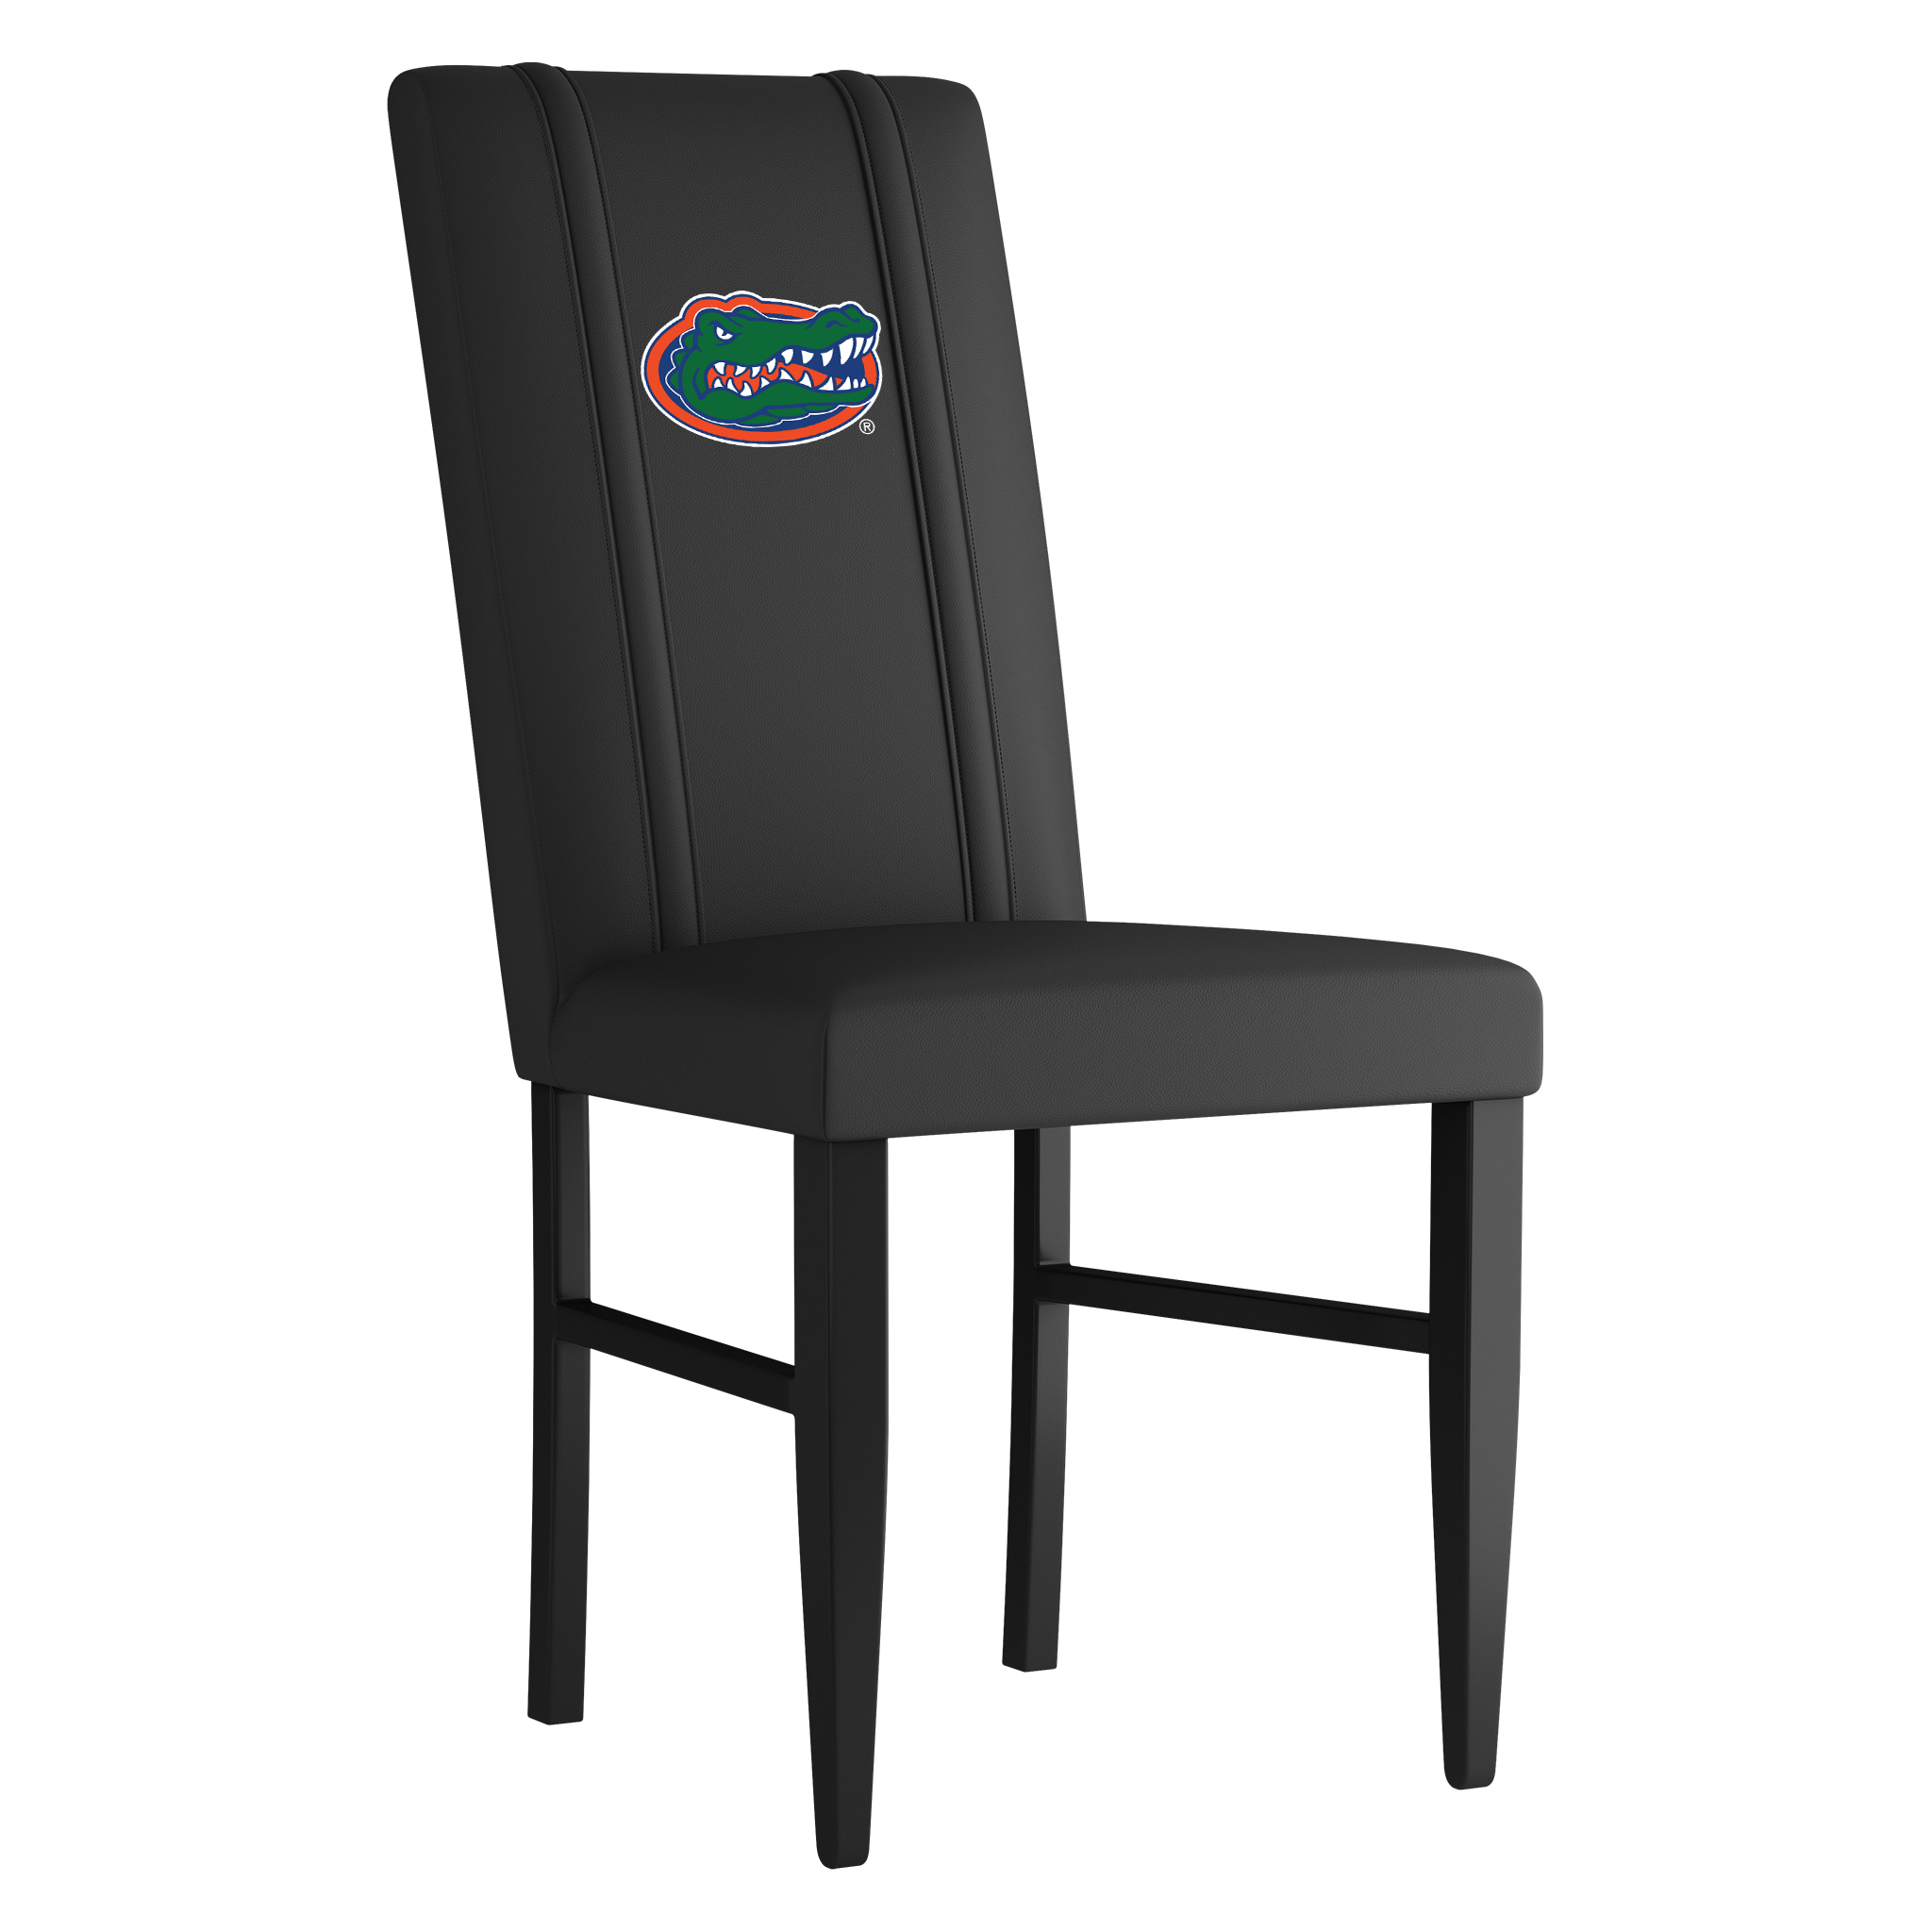 Florida Gators Side Chair 2000 With Florida Gators Primary Logo Panel